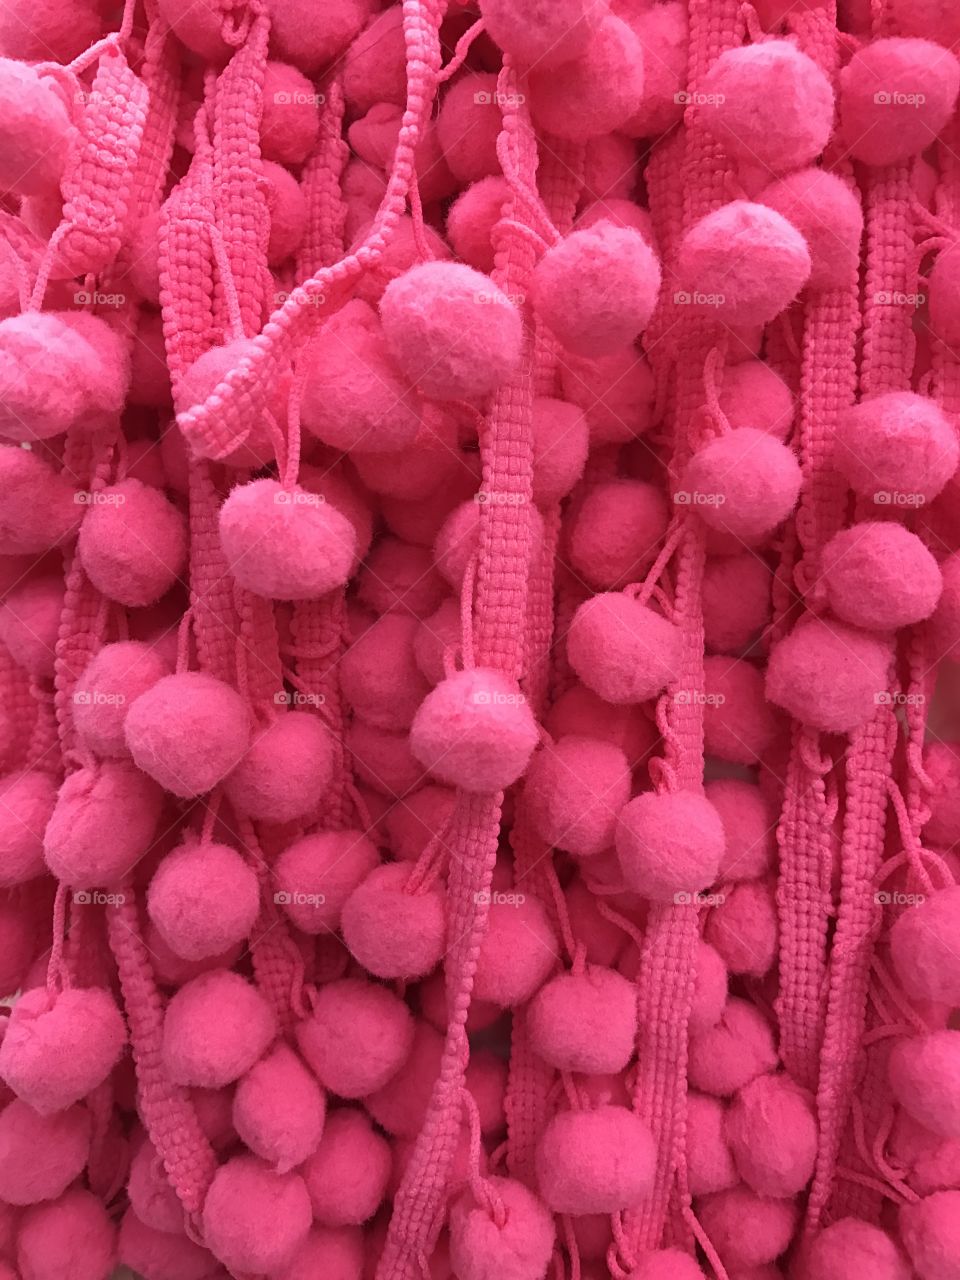 Close-up of pink pompoms